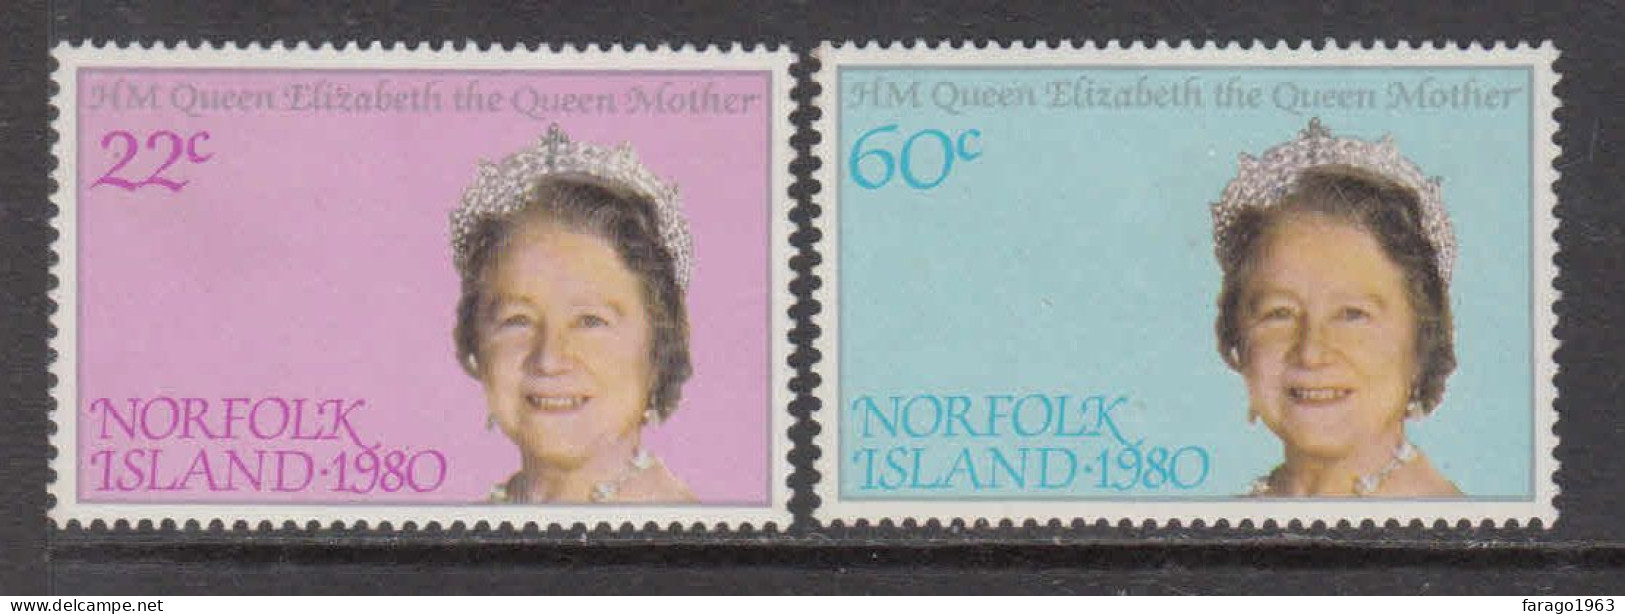 1980 Norfolk Island  Queen Mother Royalty Complete Set Of 2  MNH - Norfolk Island